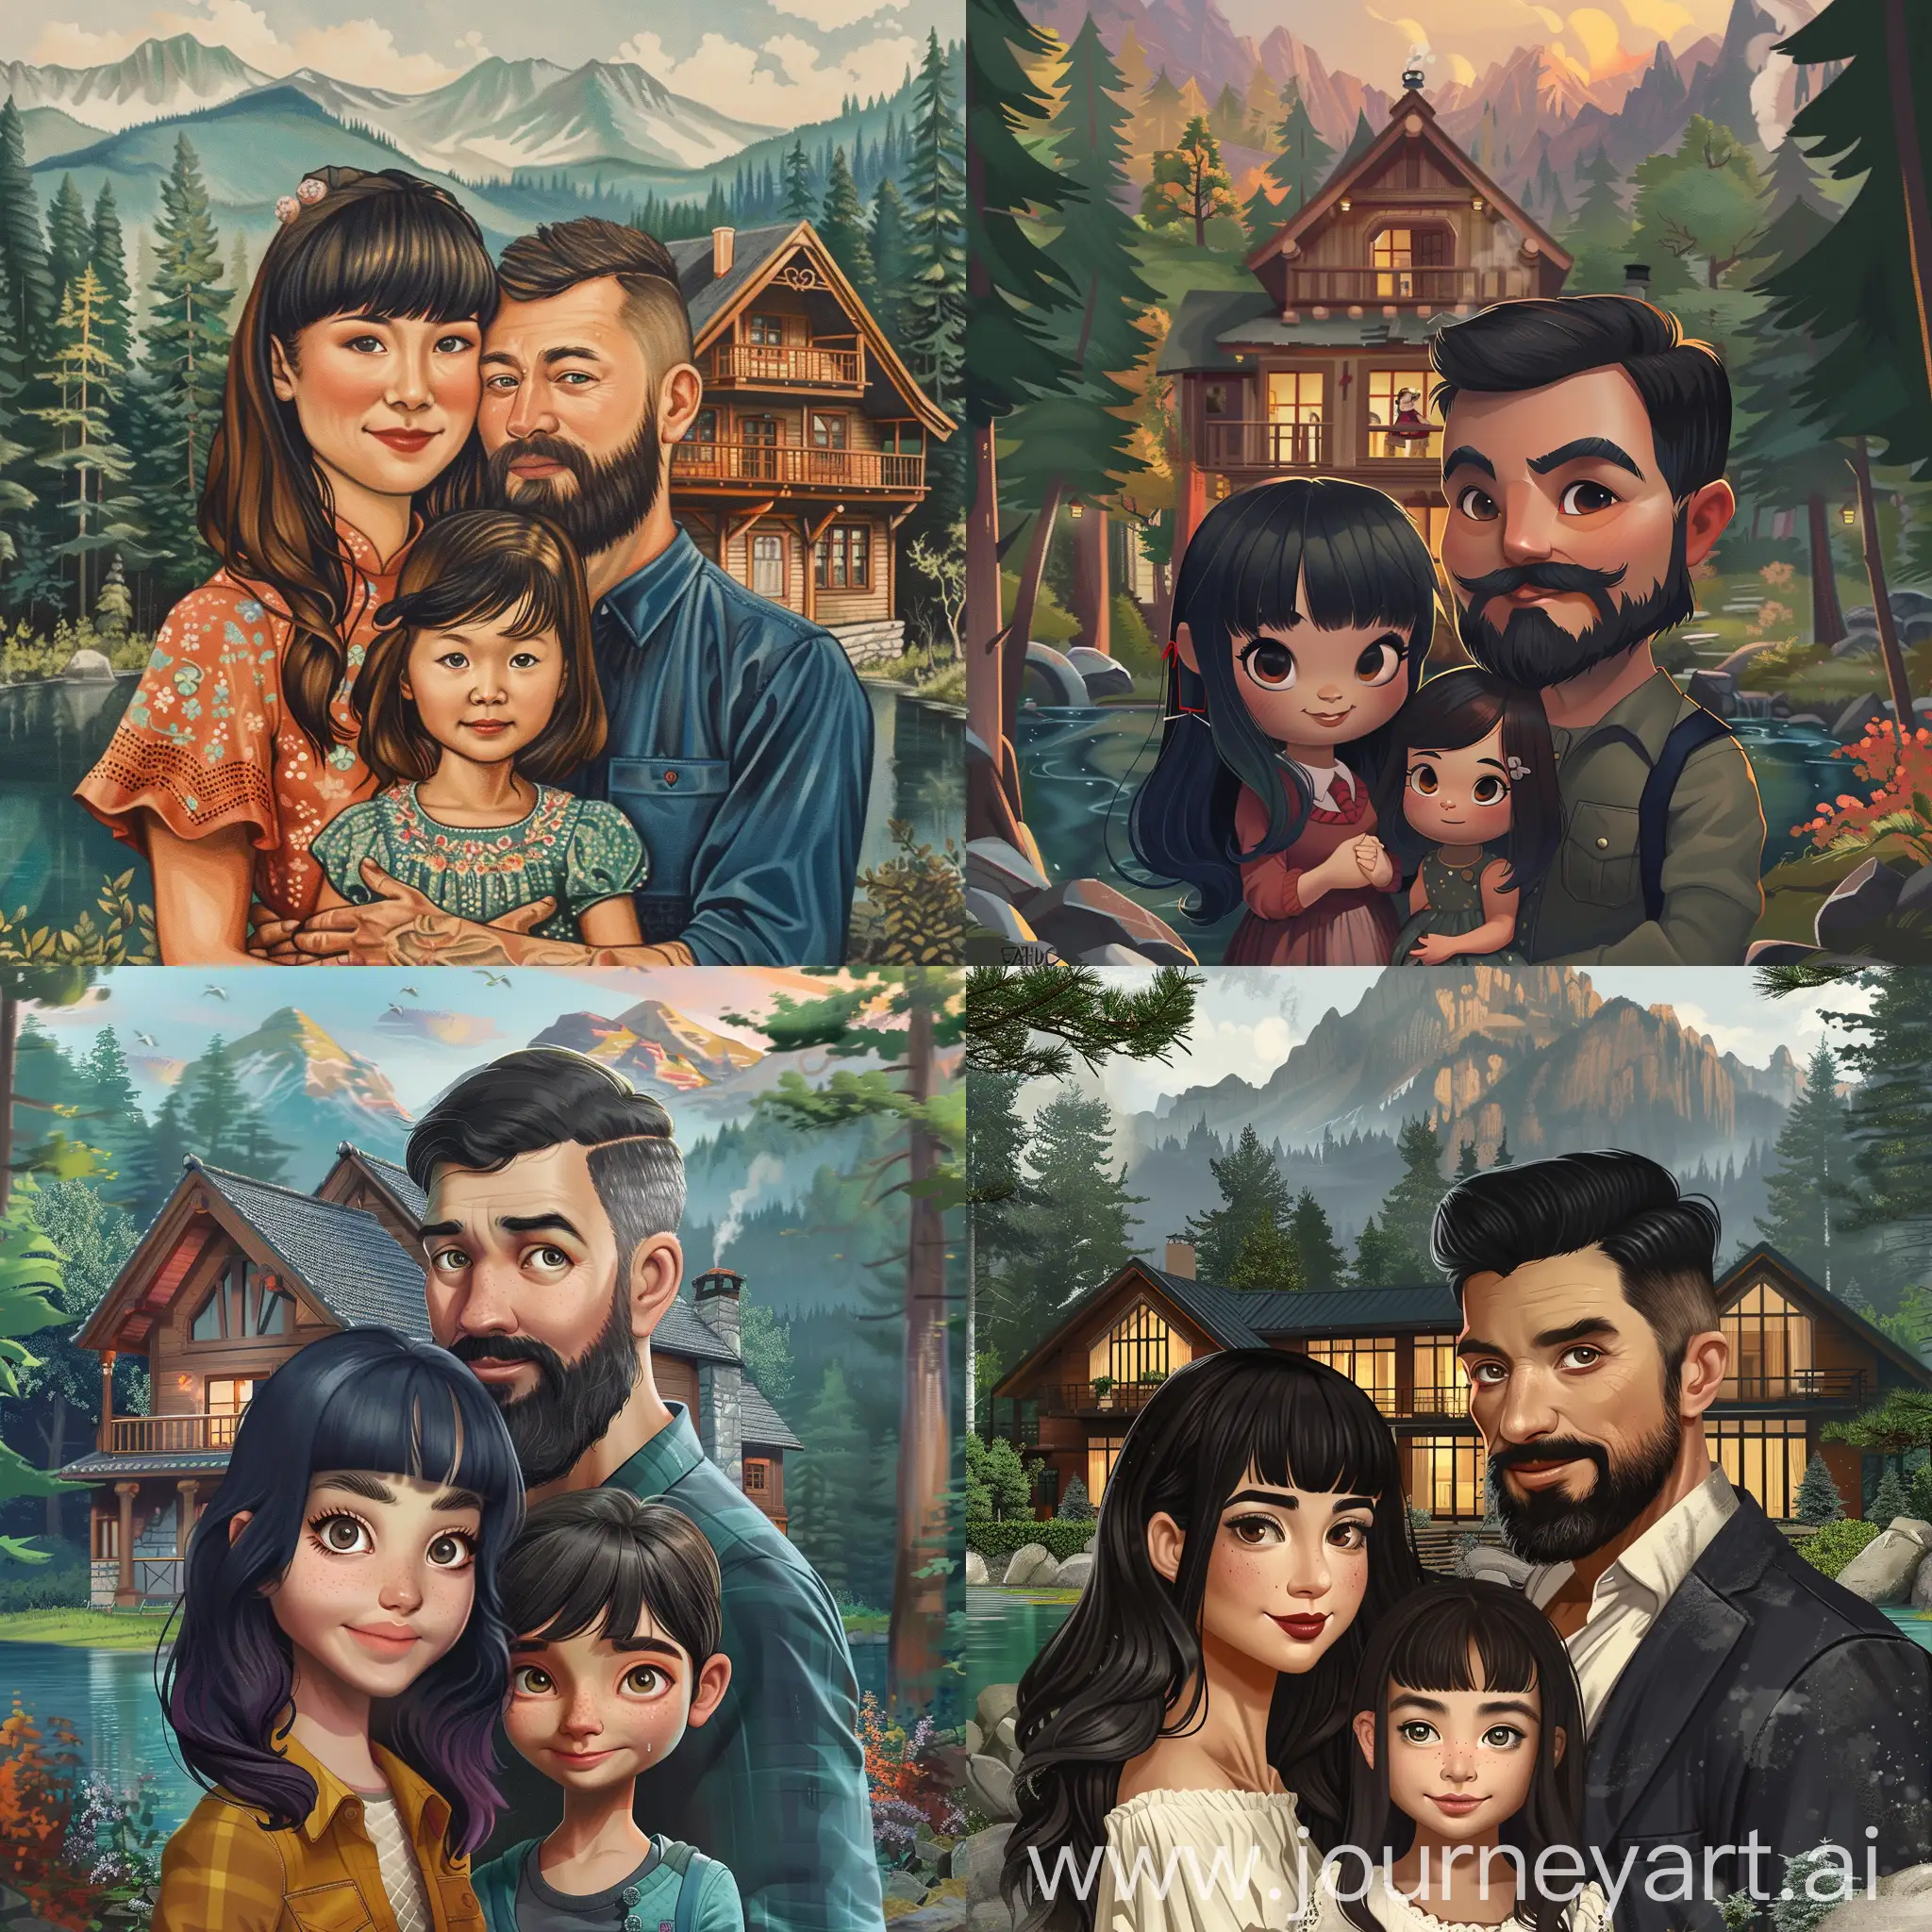 Kazakh-Asian-Girl-and-Portuguese-Man-Family-Enjoying-Lakeside-Retreat